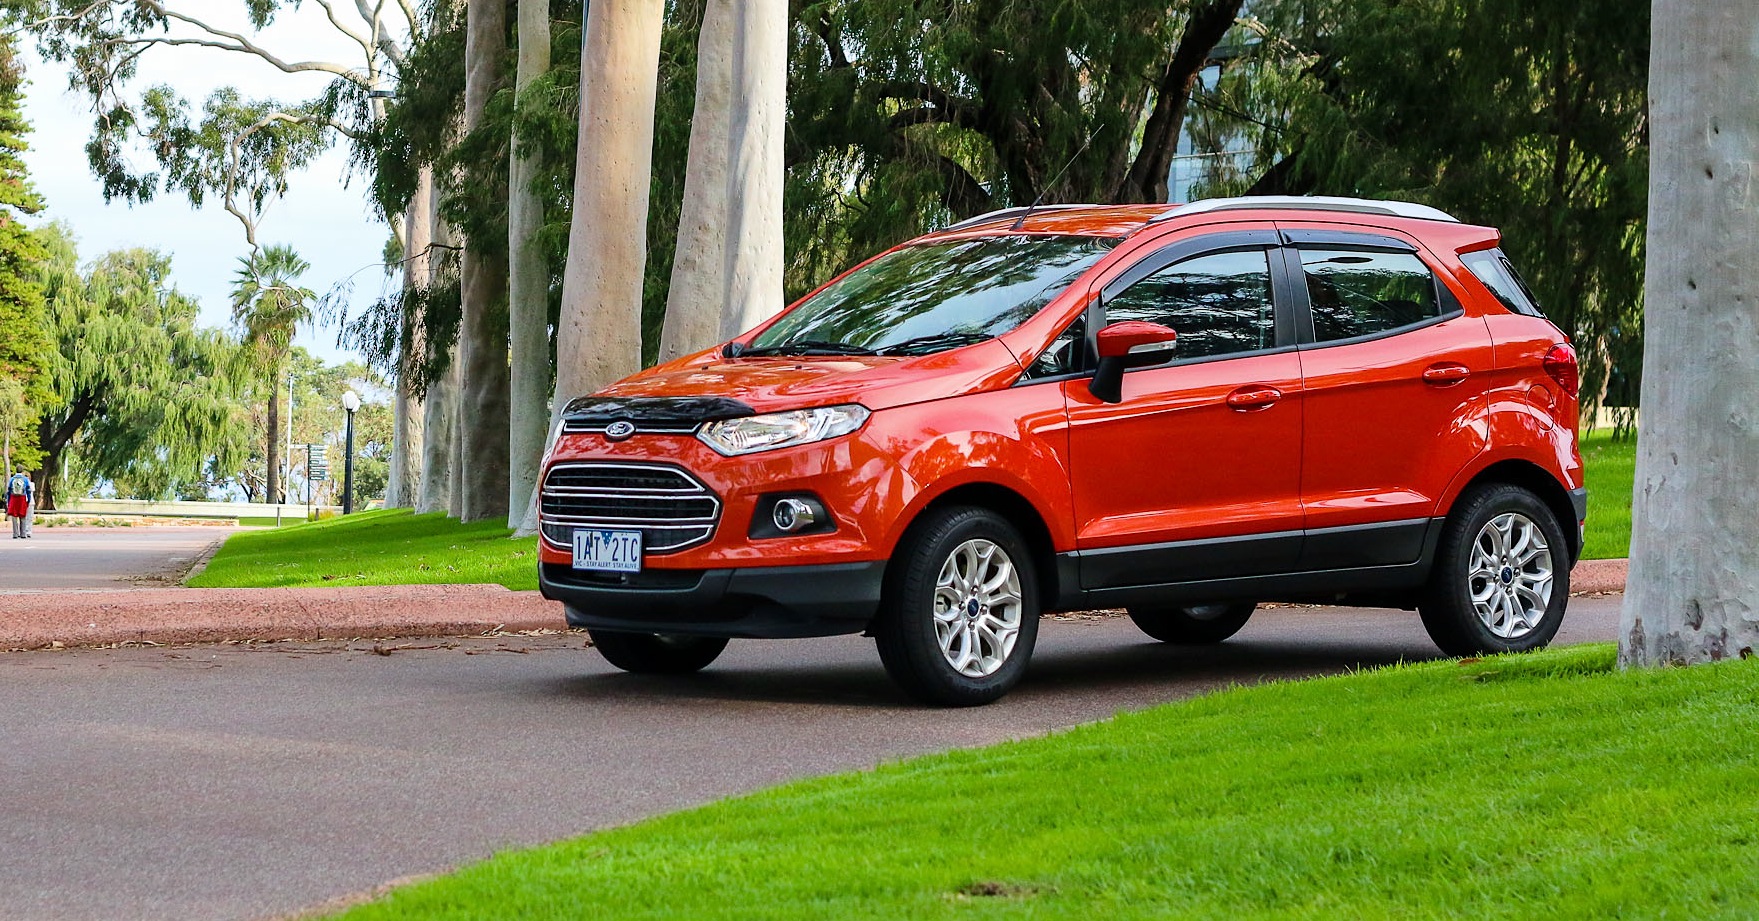 Ford EcoSport (2015) цена и характеристики, фото и обзор